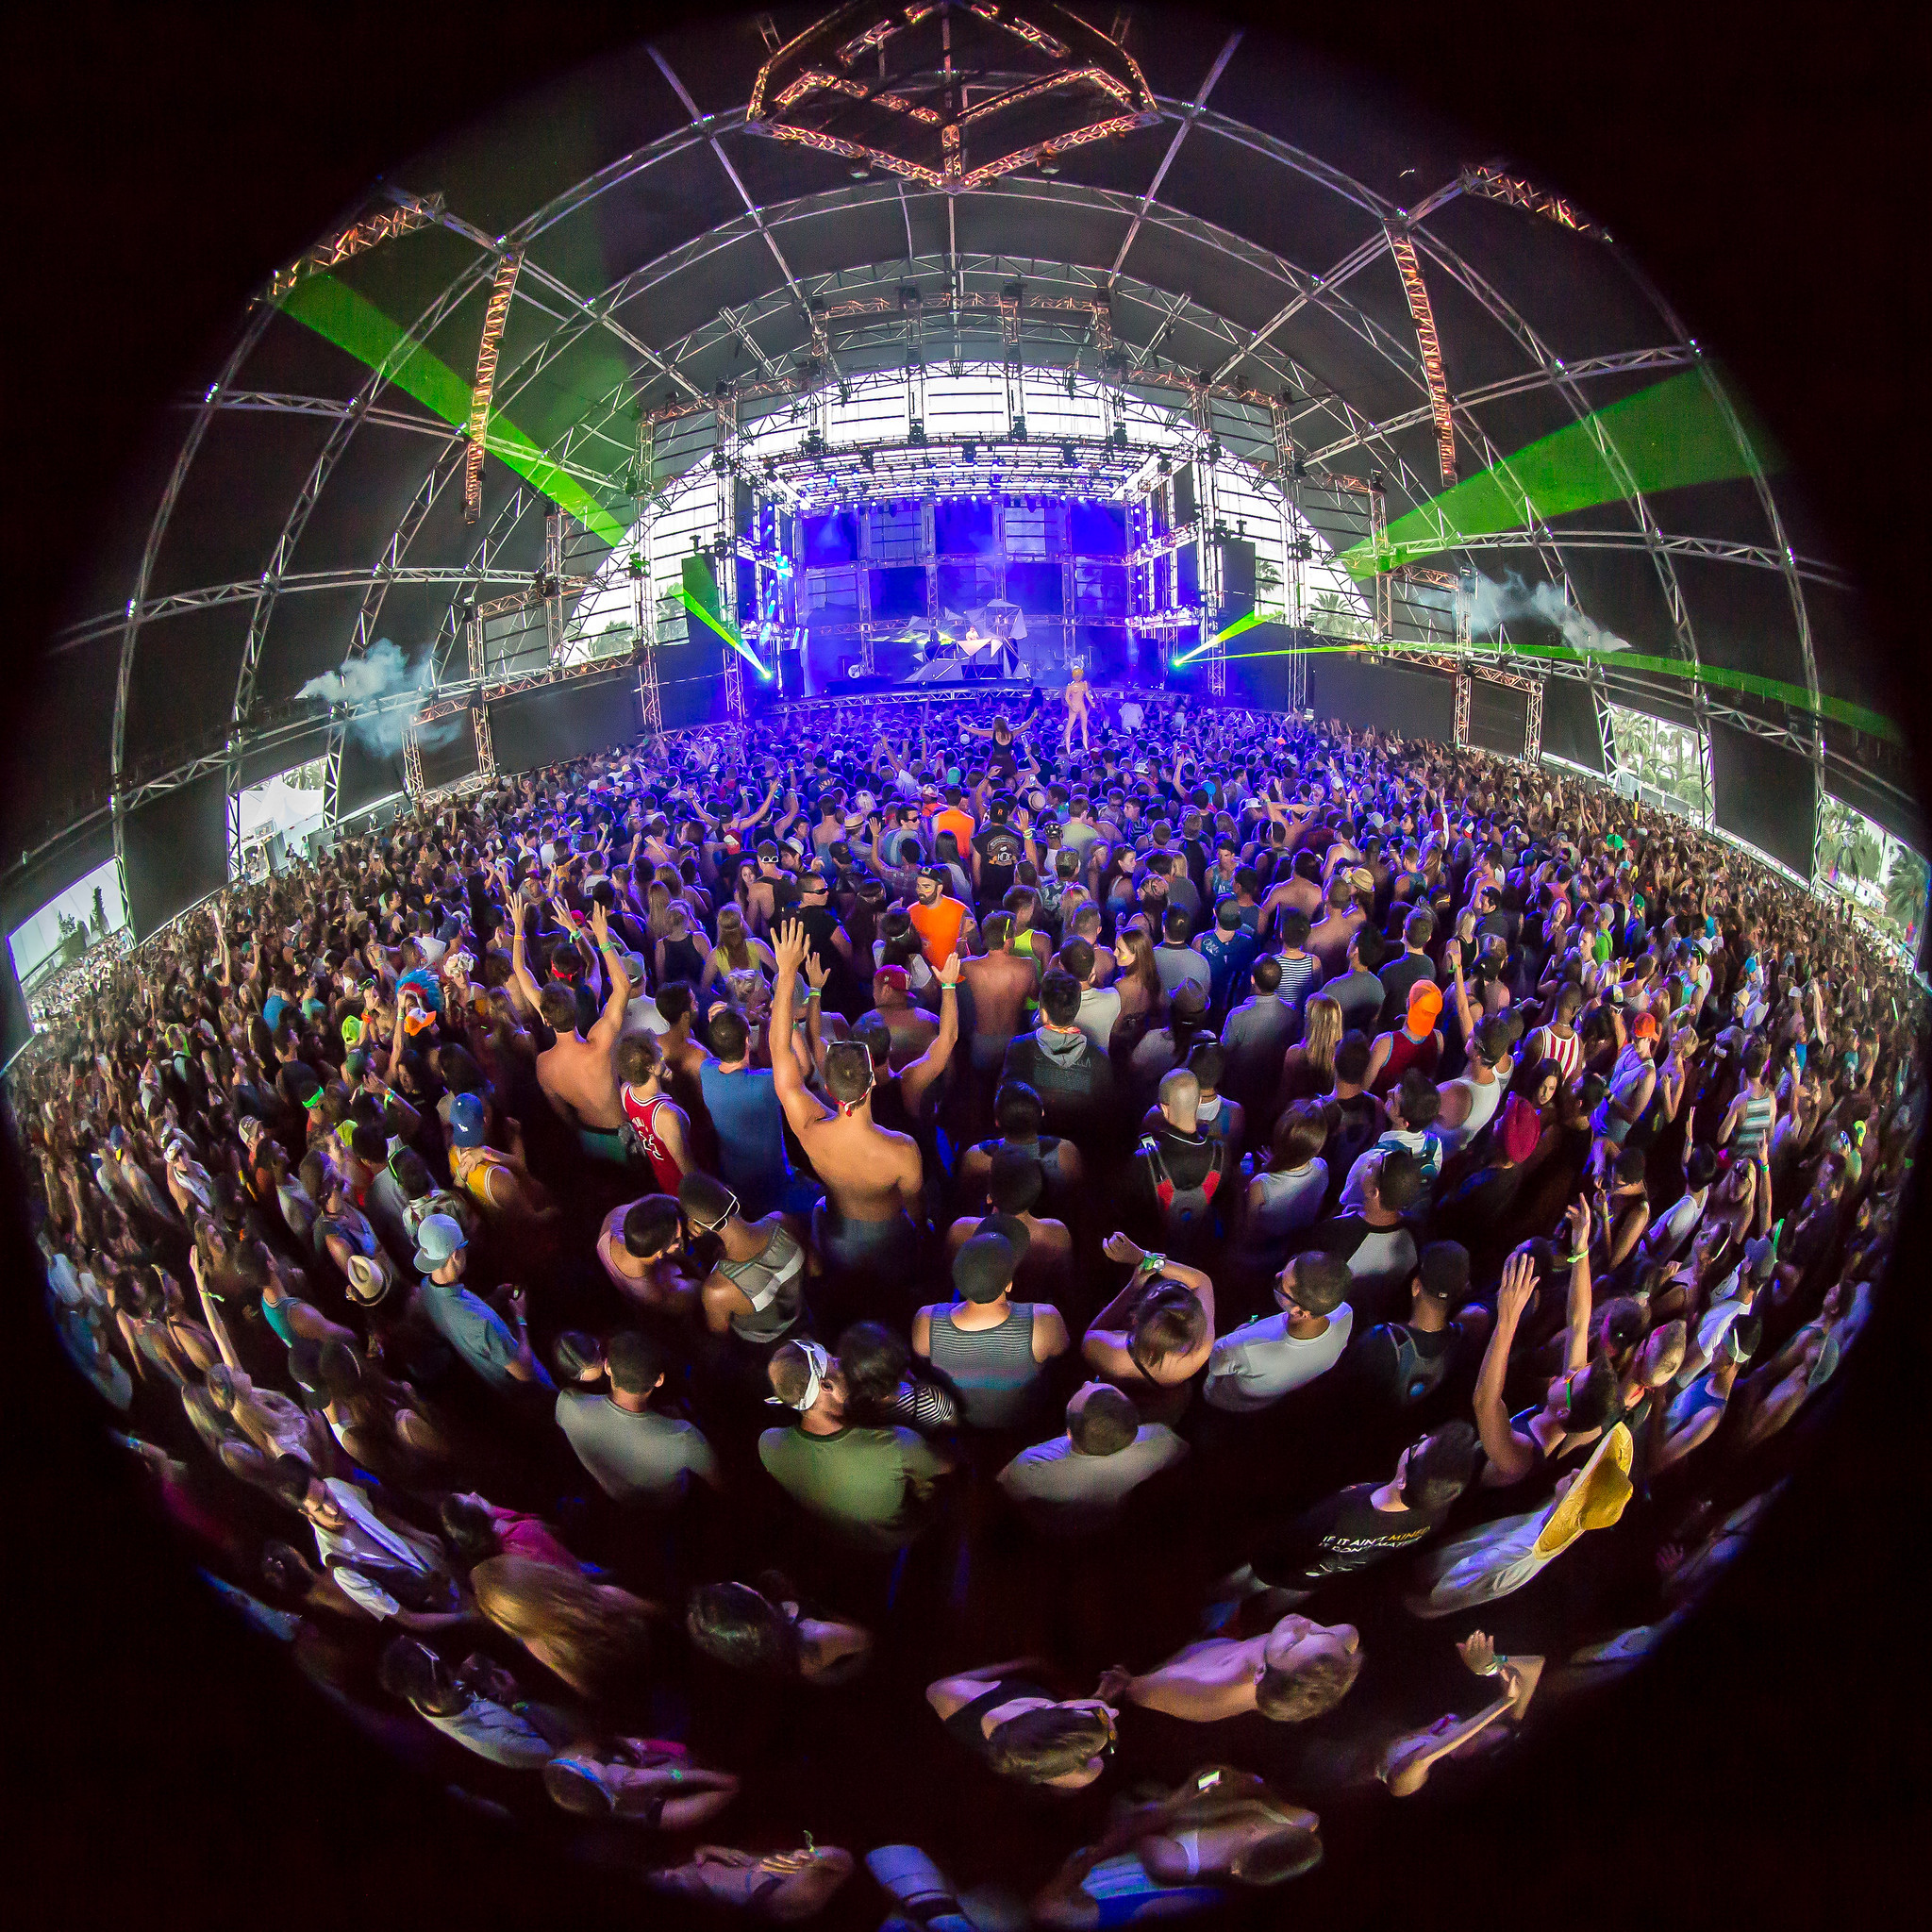 EcoworldReactor Coachella Live 2015 "Streaming" Music and Arts Festival